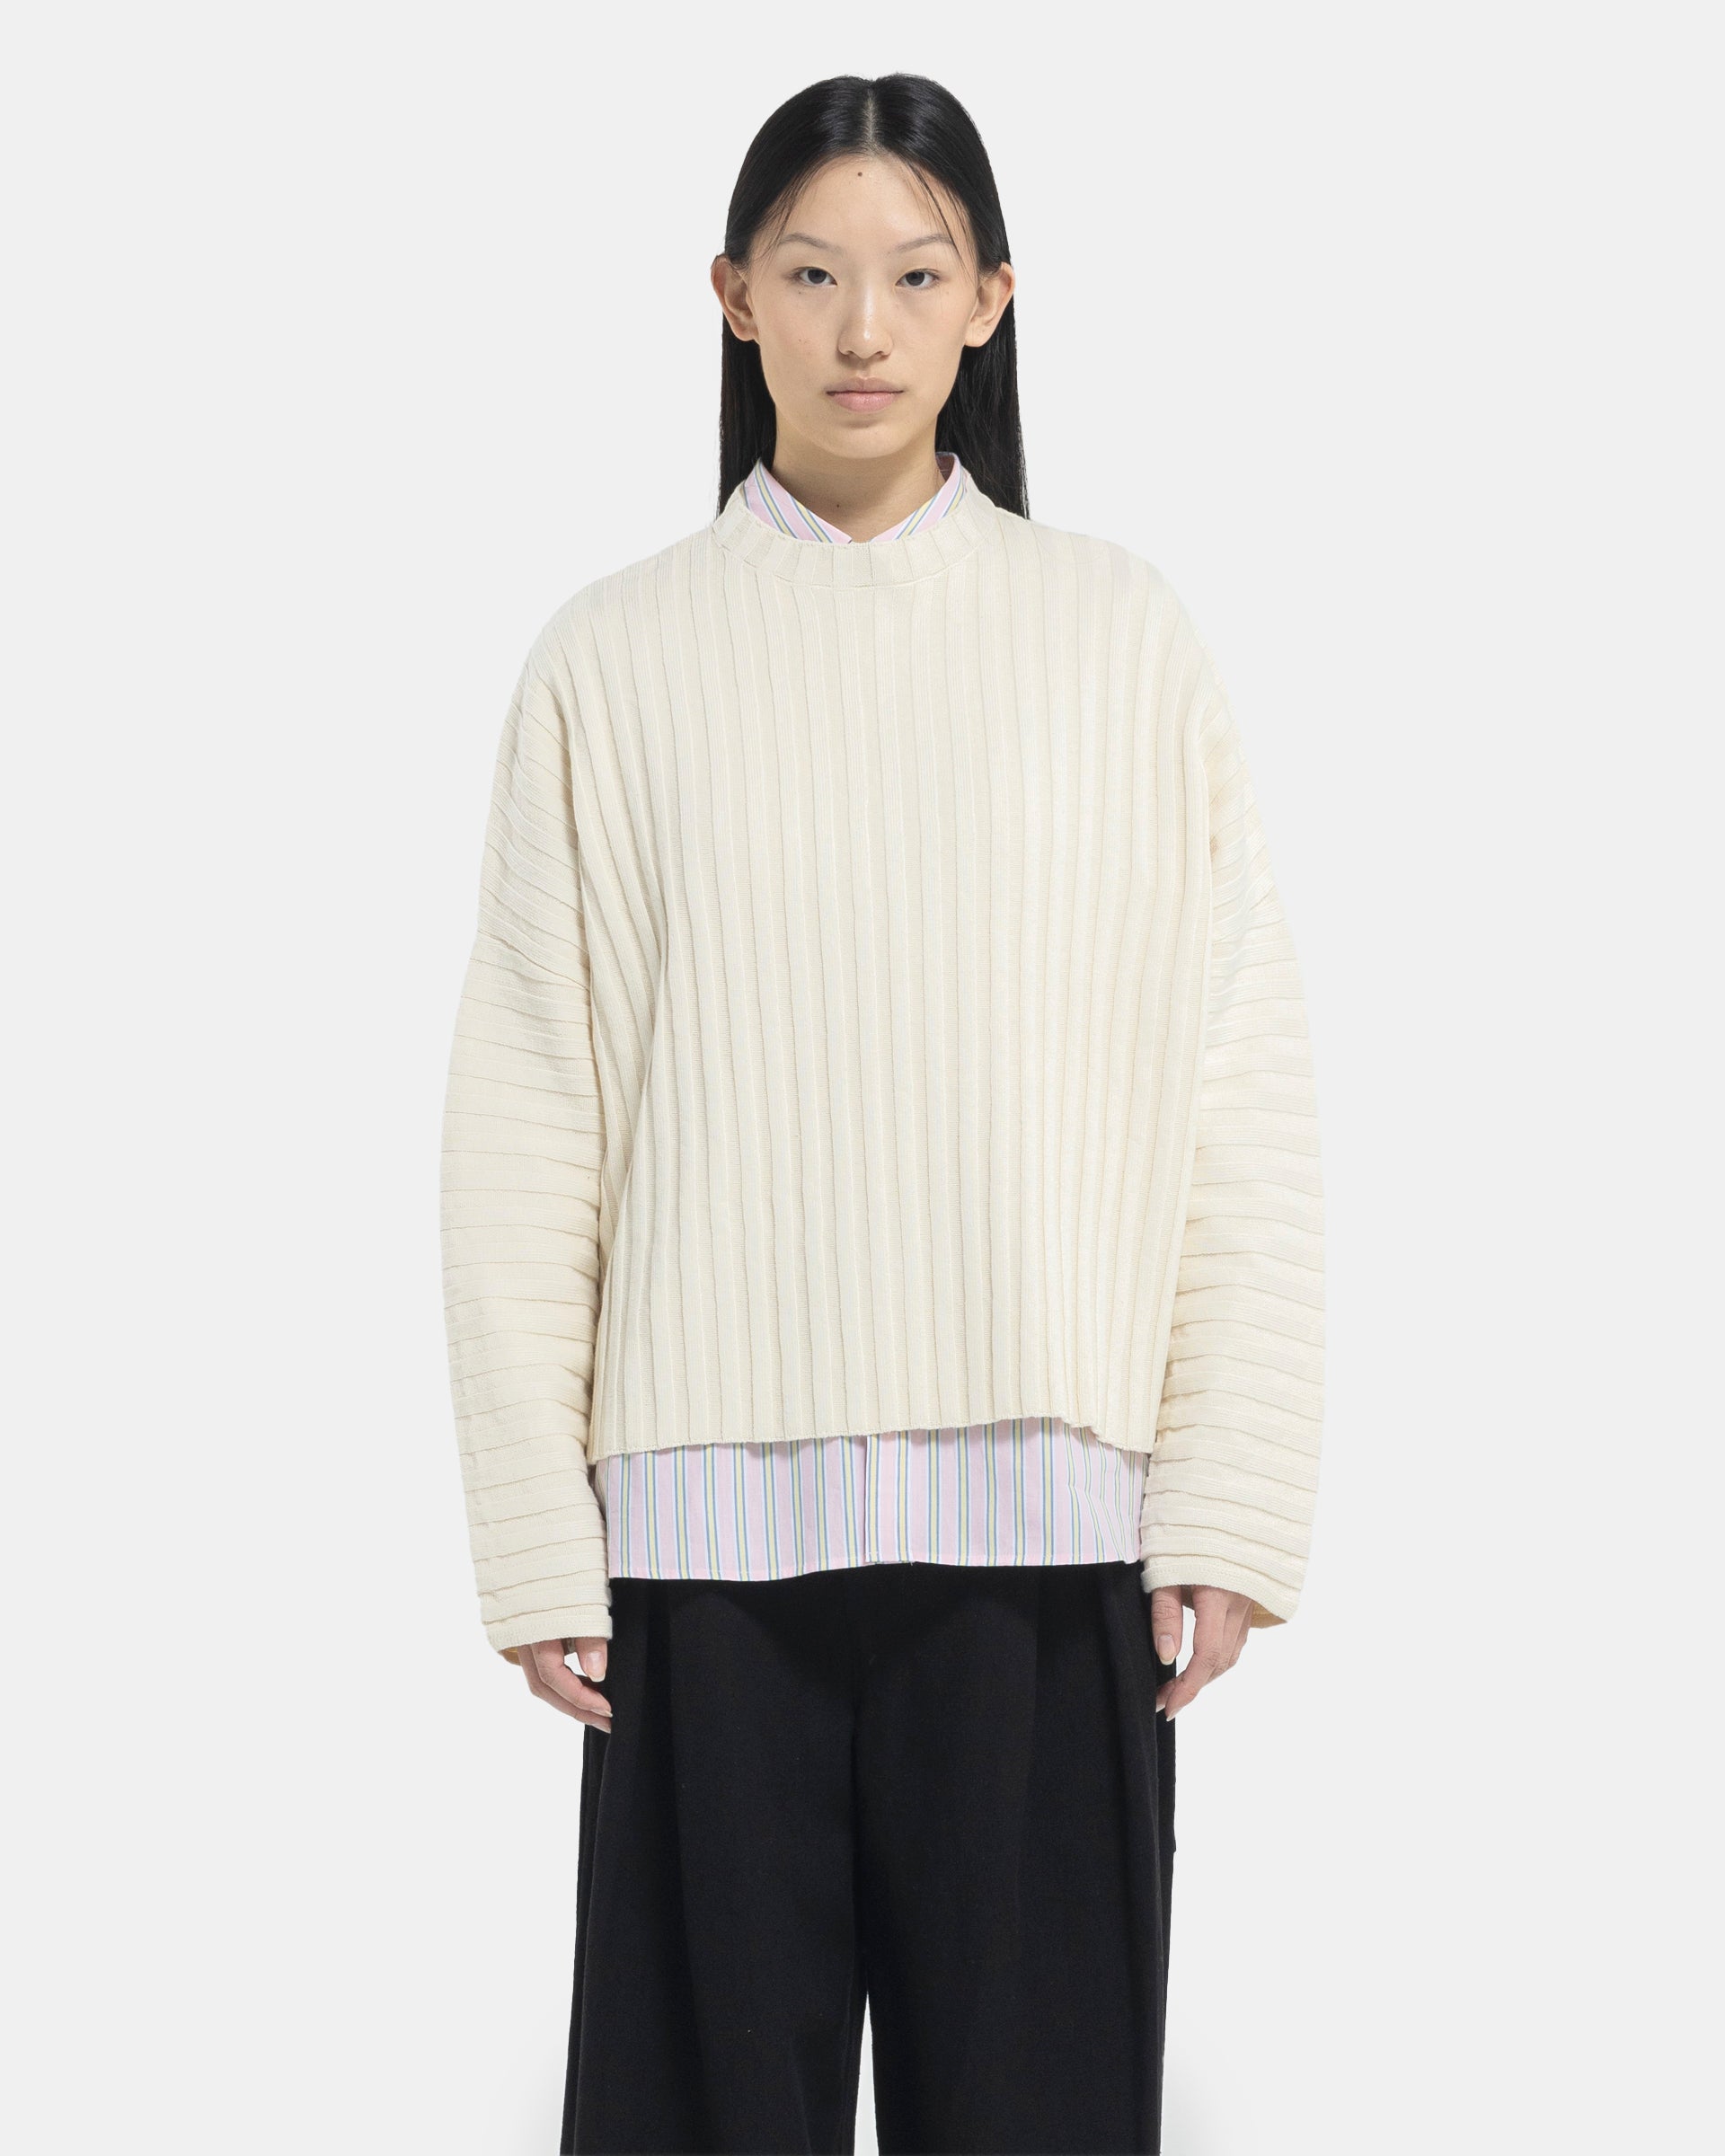 Female model wearing Eckhaus Latta Designer Wool Off-White Sweater with knit stripes